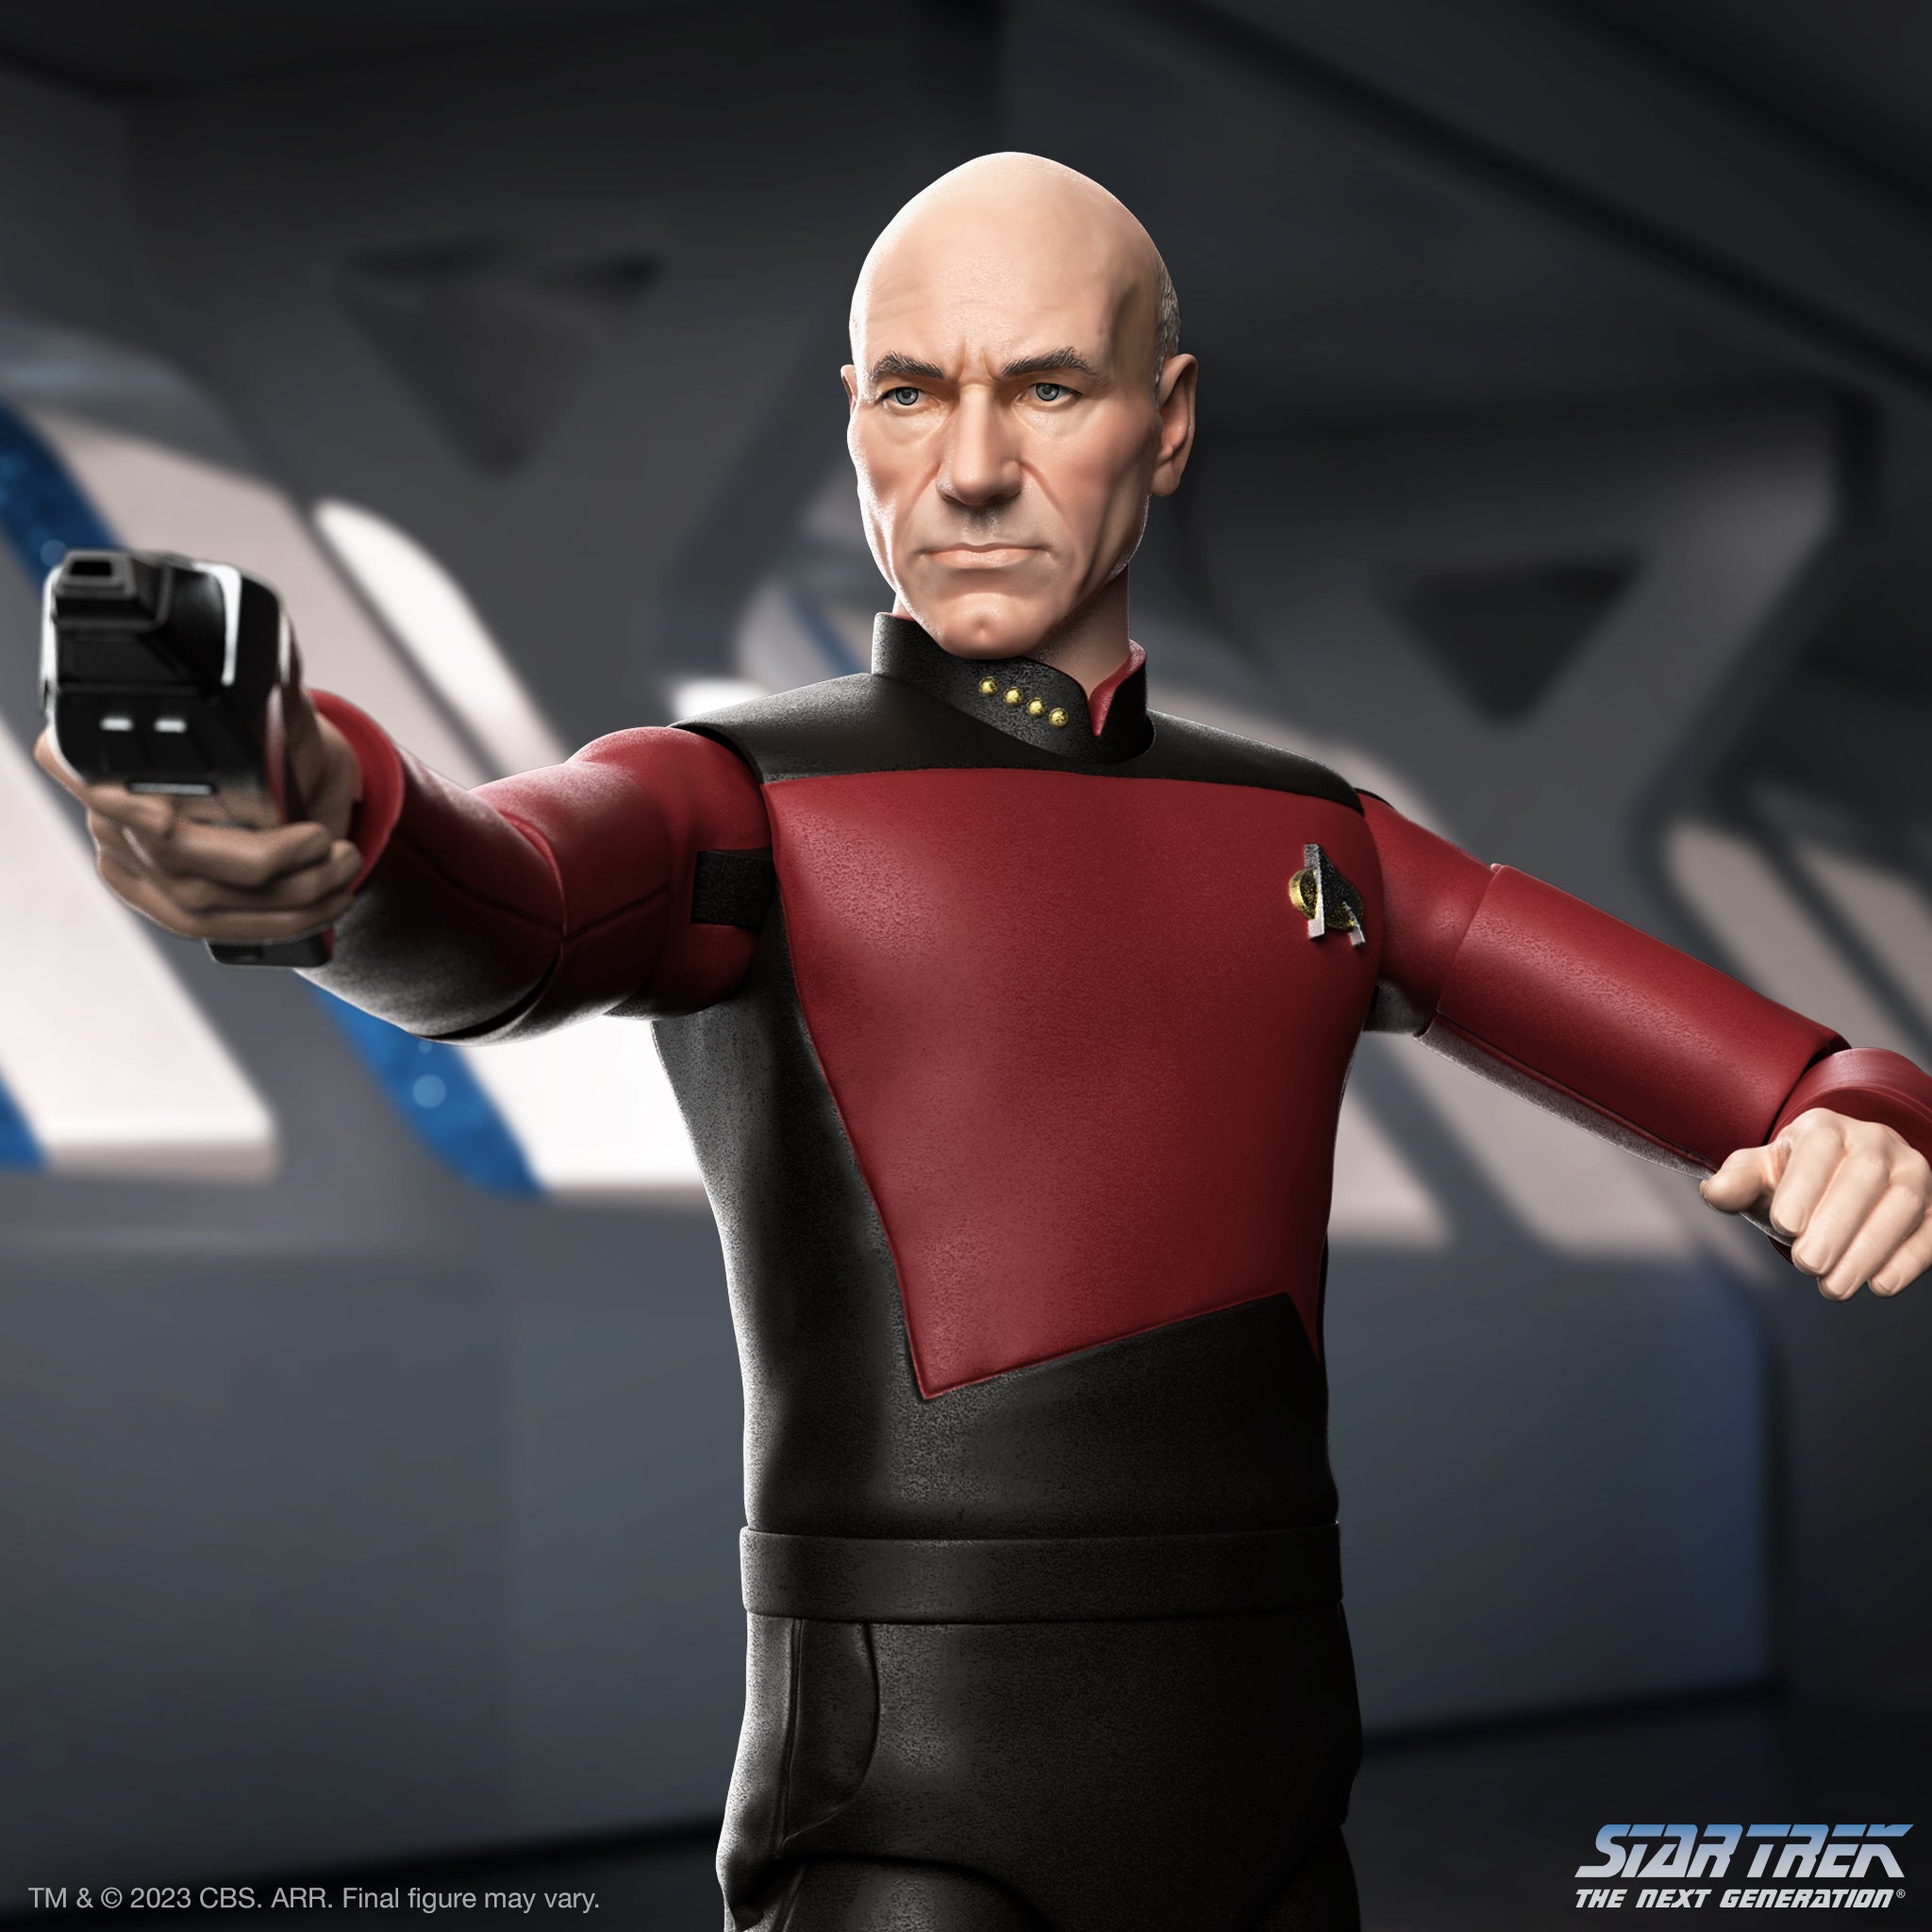 Star Trek: The Next Generation ULTIMATES! W2 - Captain Picard